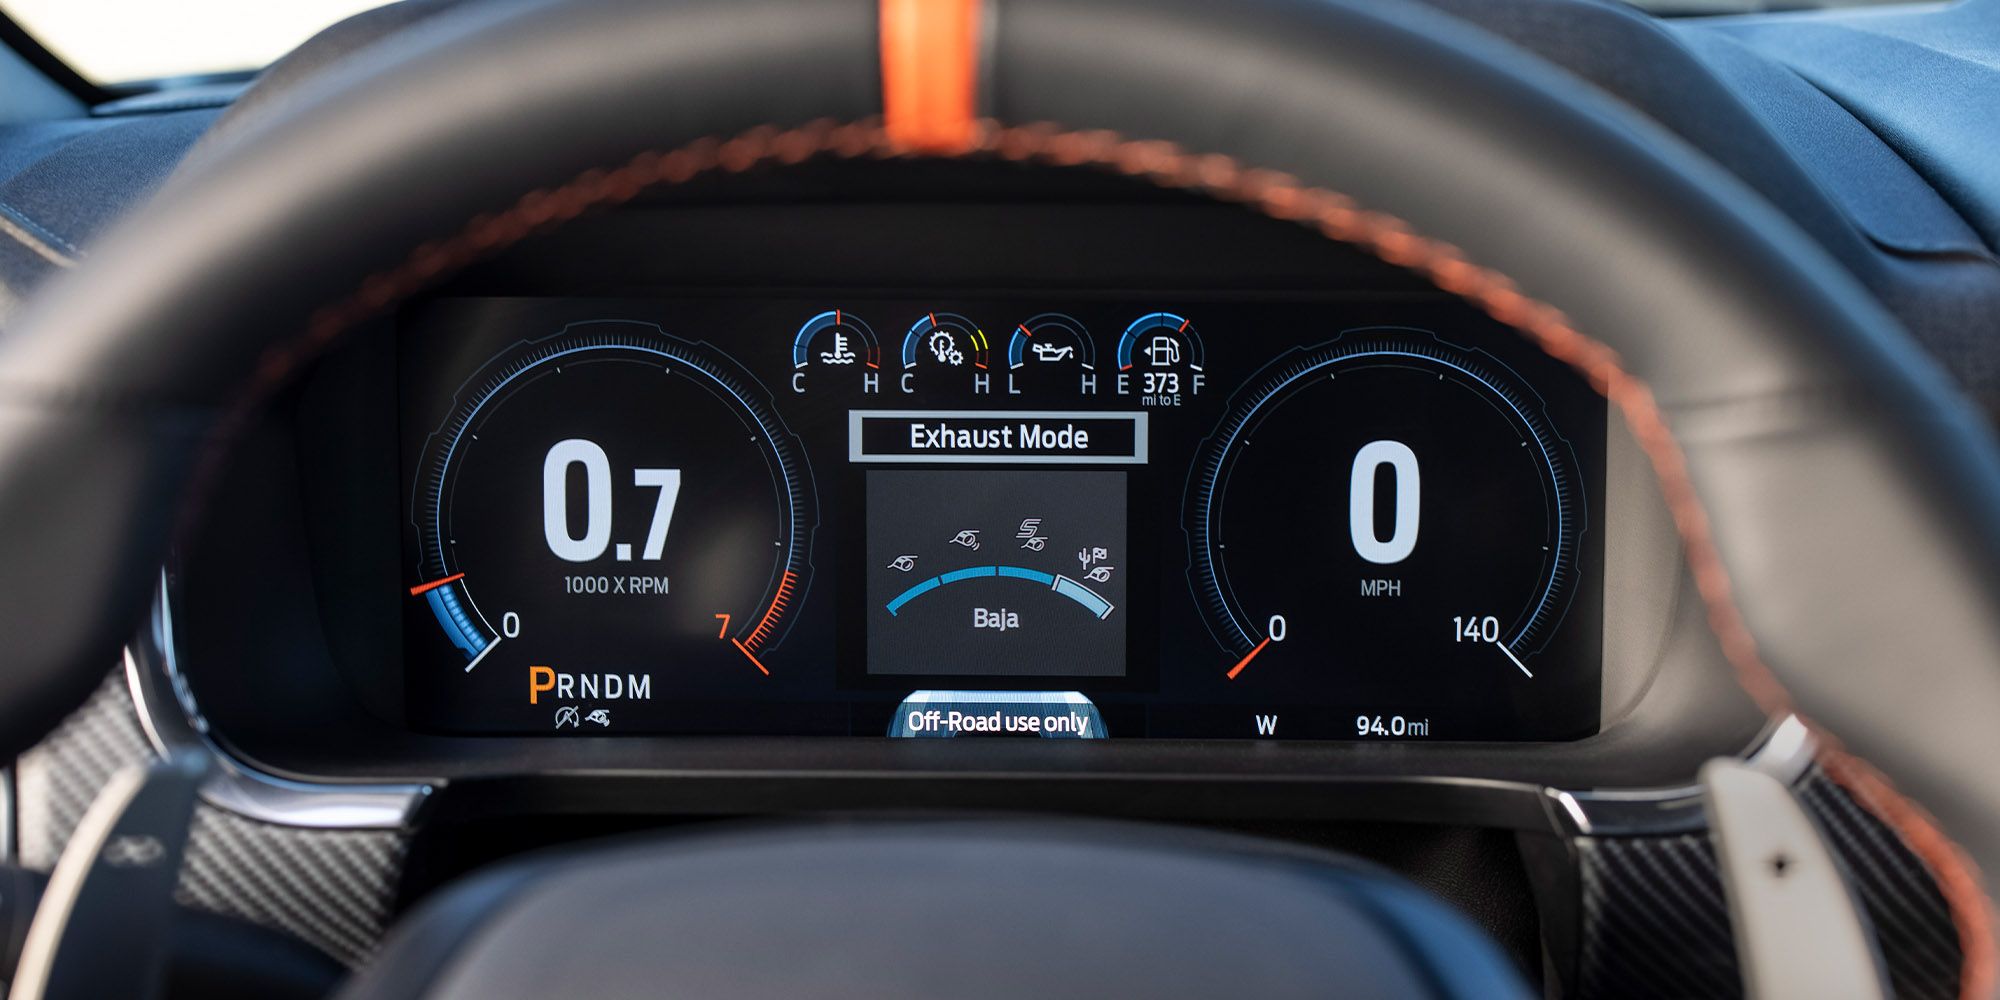 The F150 Raptor's digital dashboard